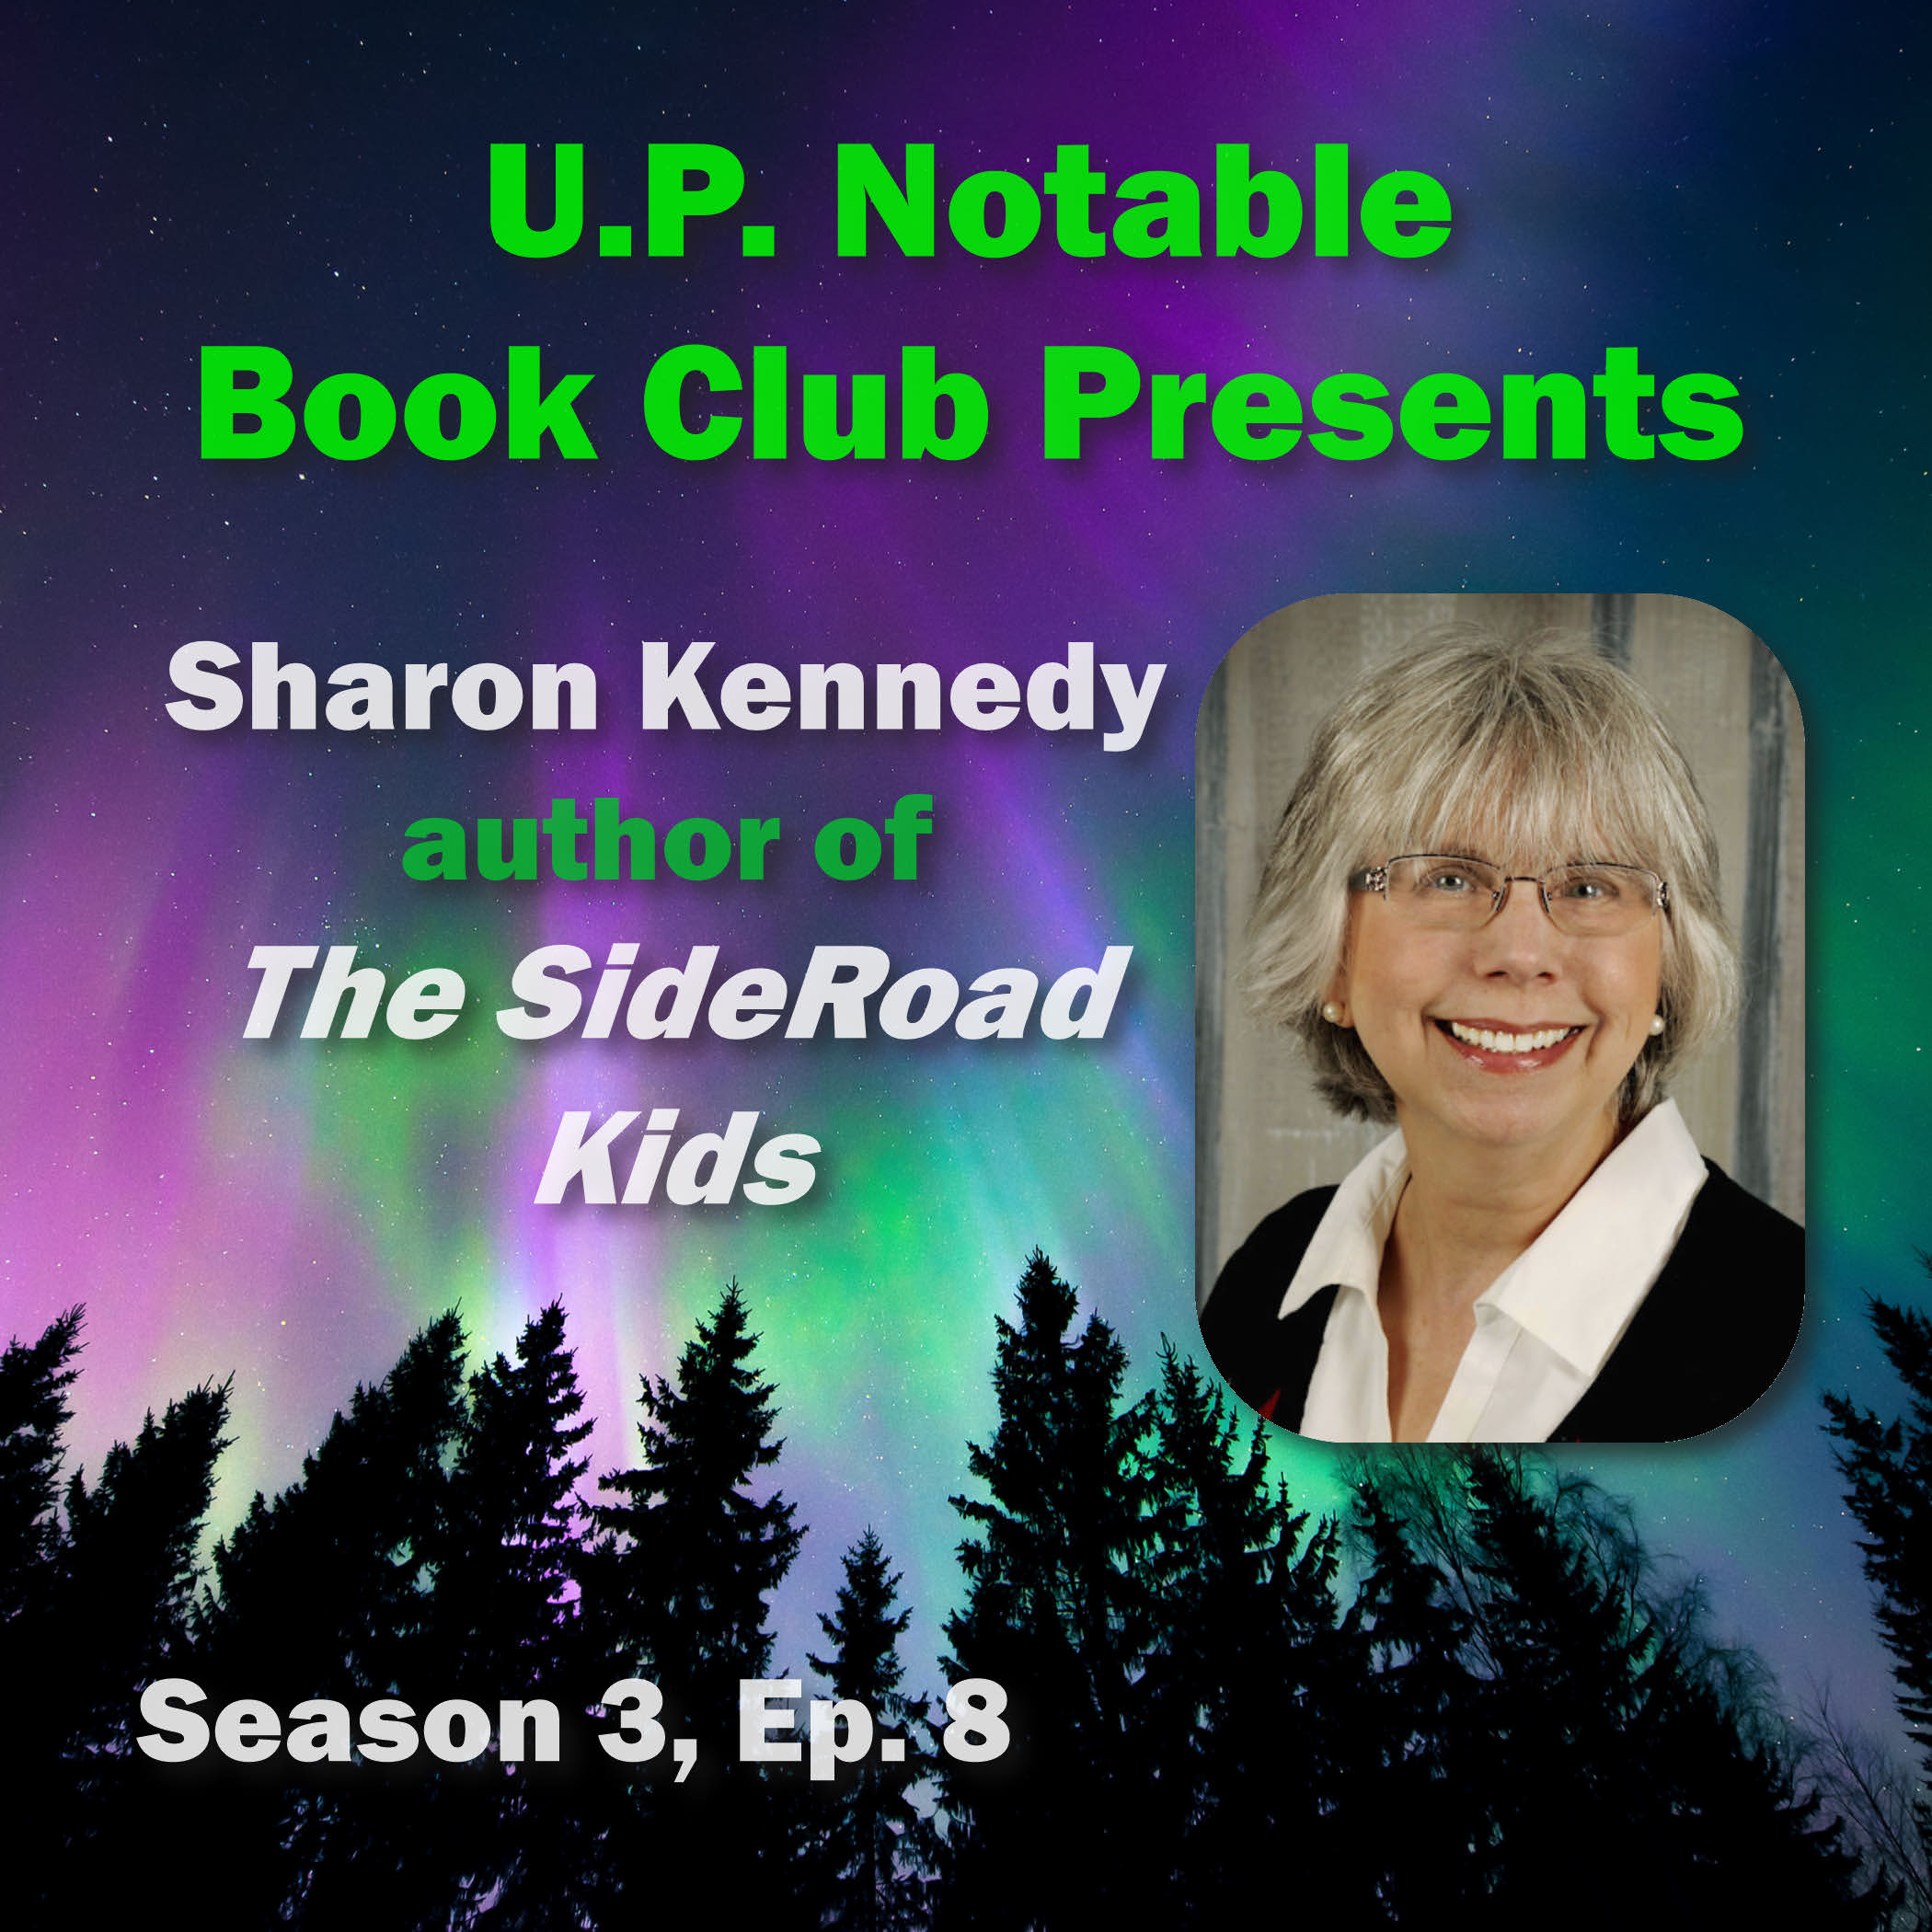 UPPAA Sharon kennedy author of the sideroad kids.